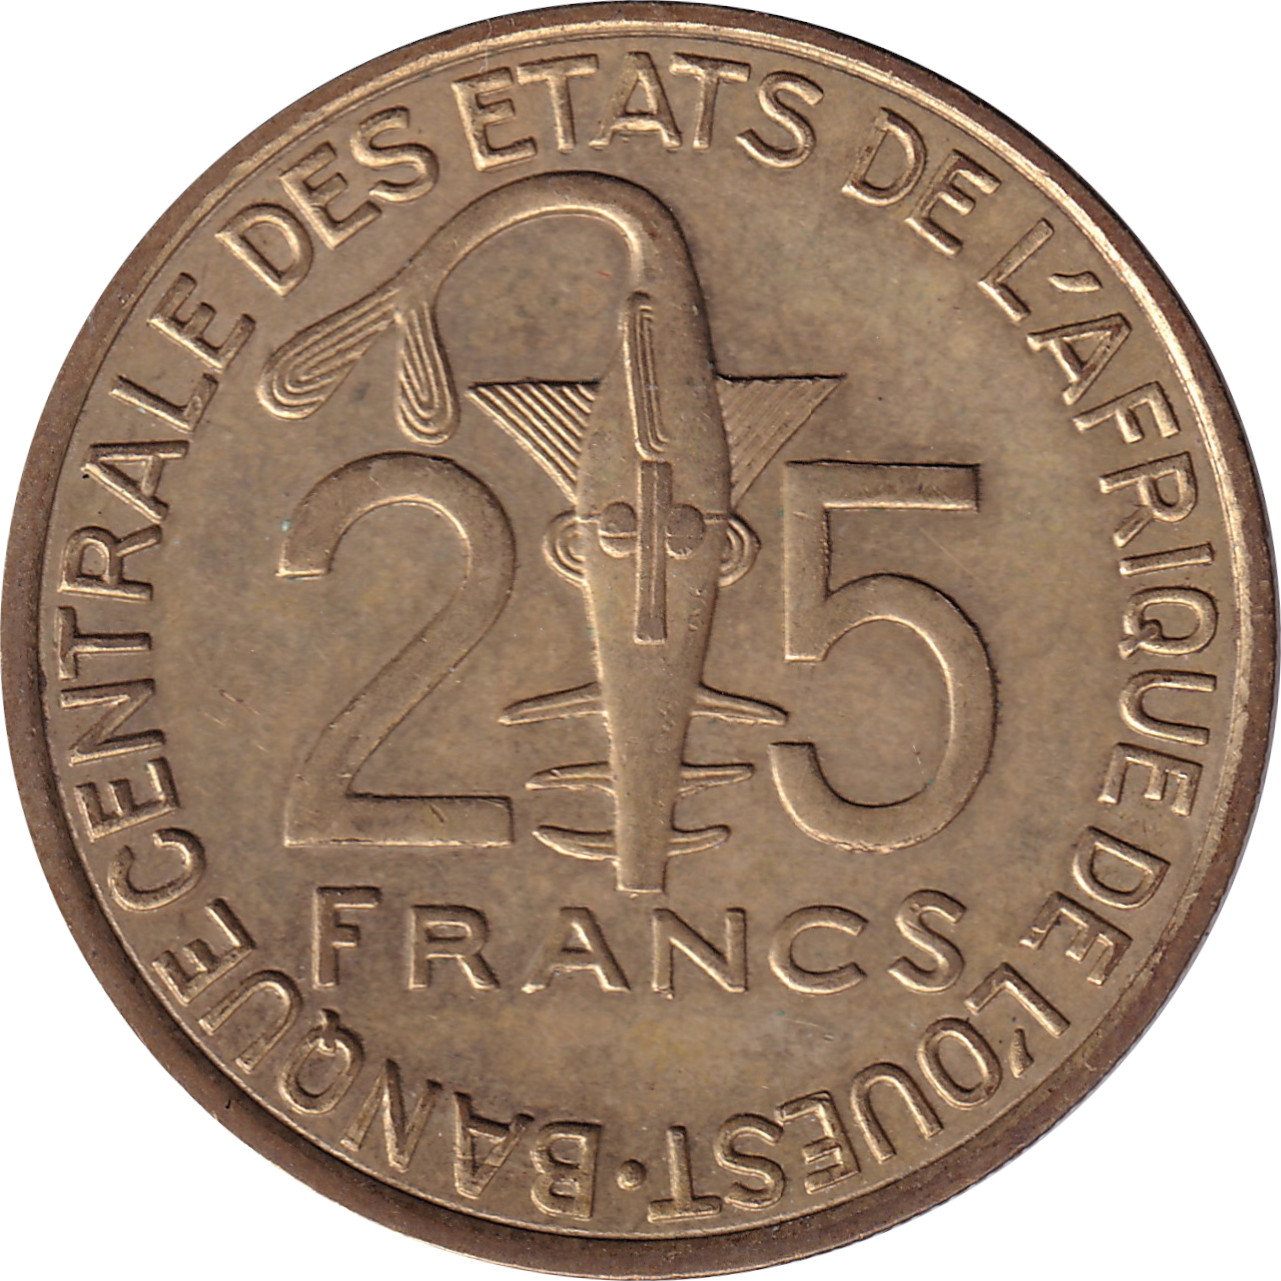 25 francs - Laborantine